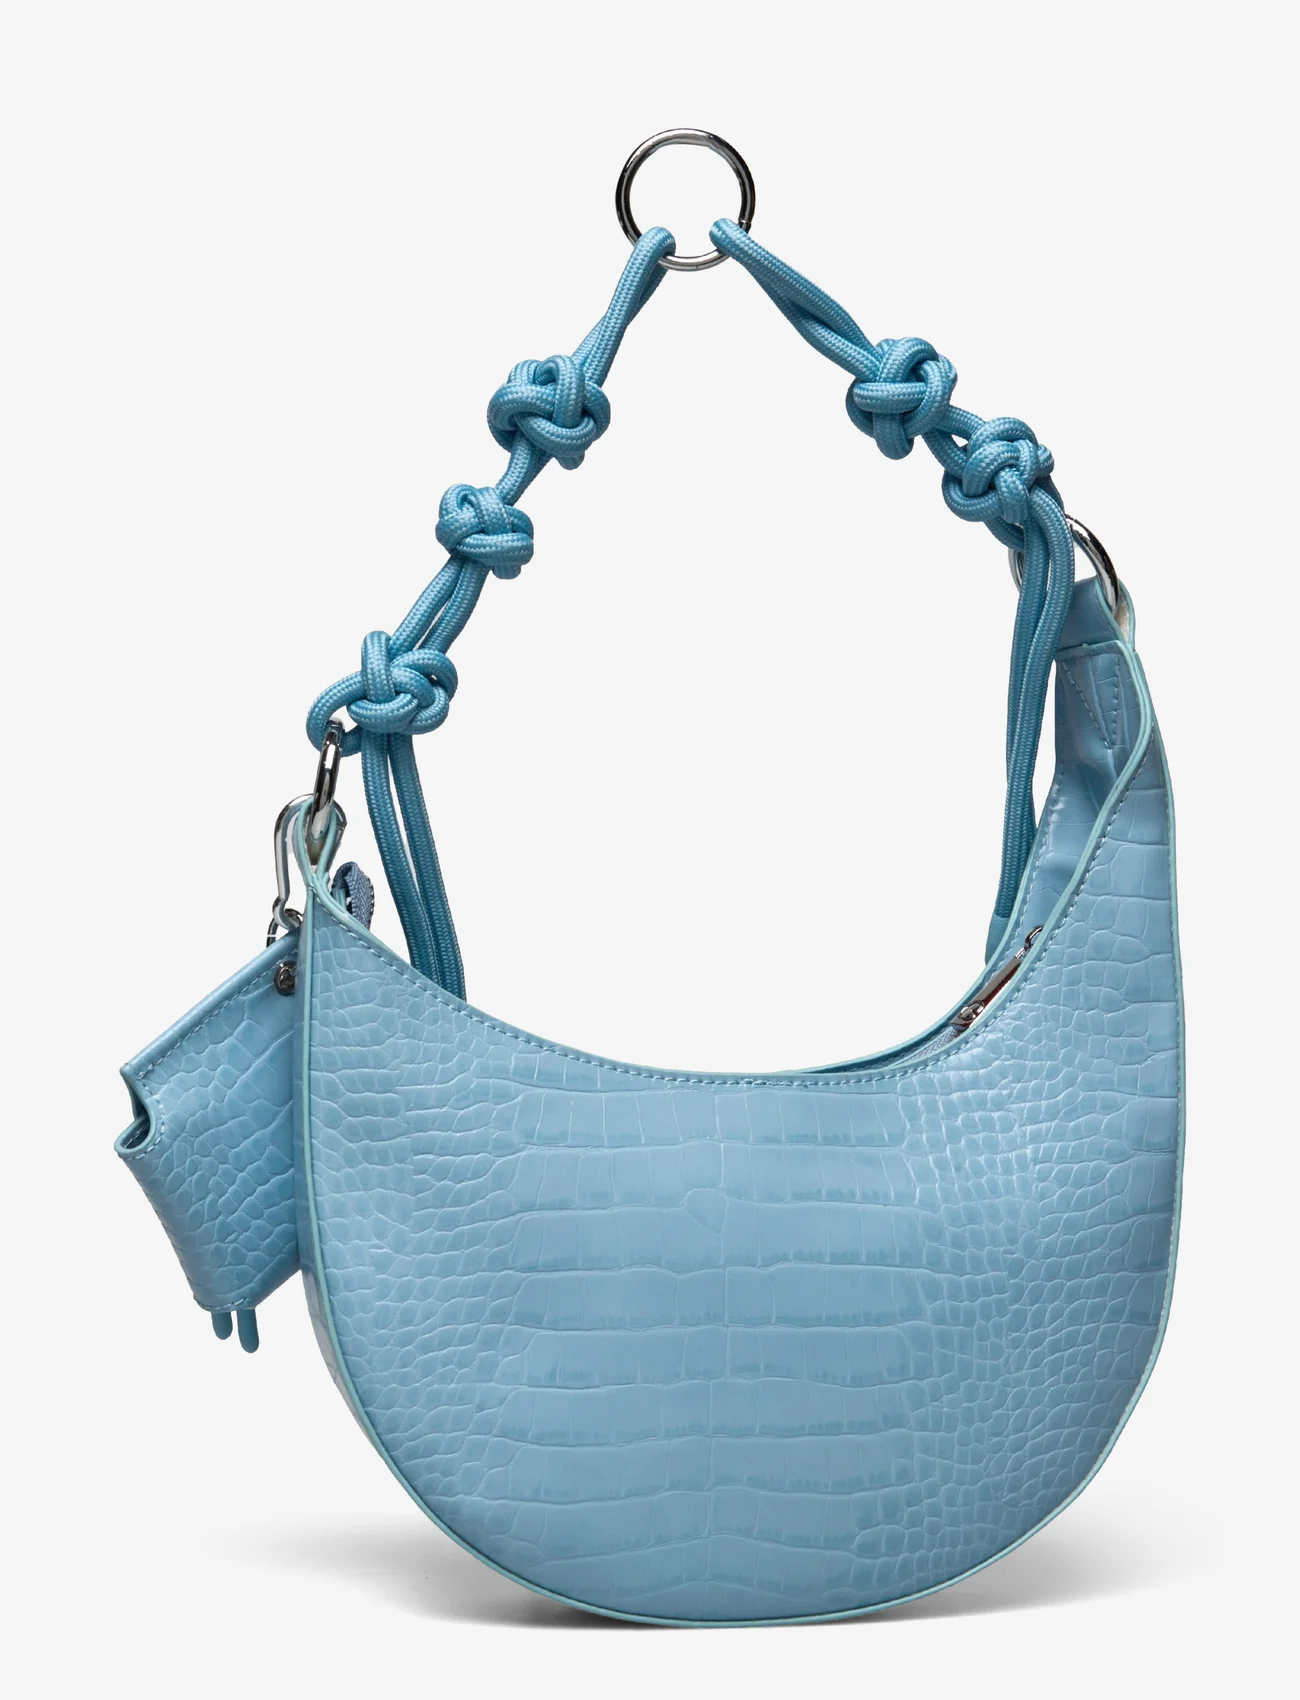 Silfen - Helene Shoulder Bag - feestelijke kleding voor outlet-prijzen - blue turtle - 1